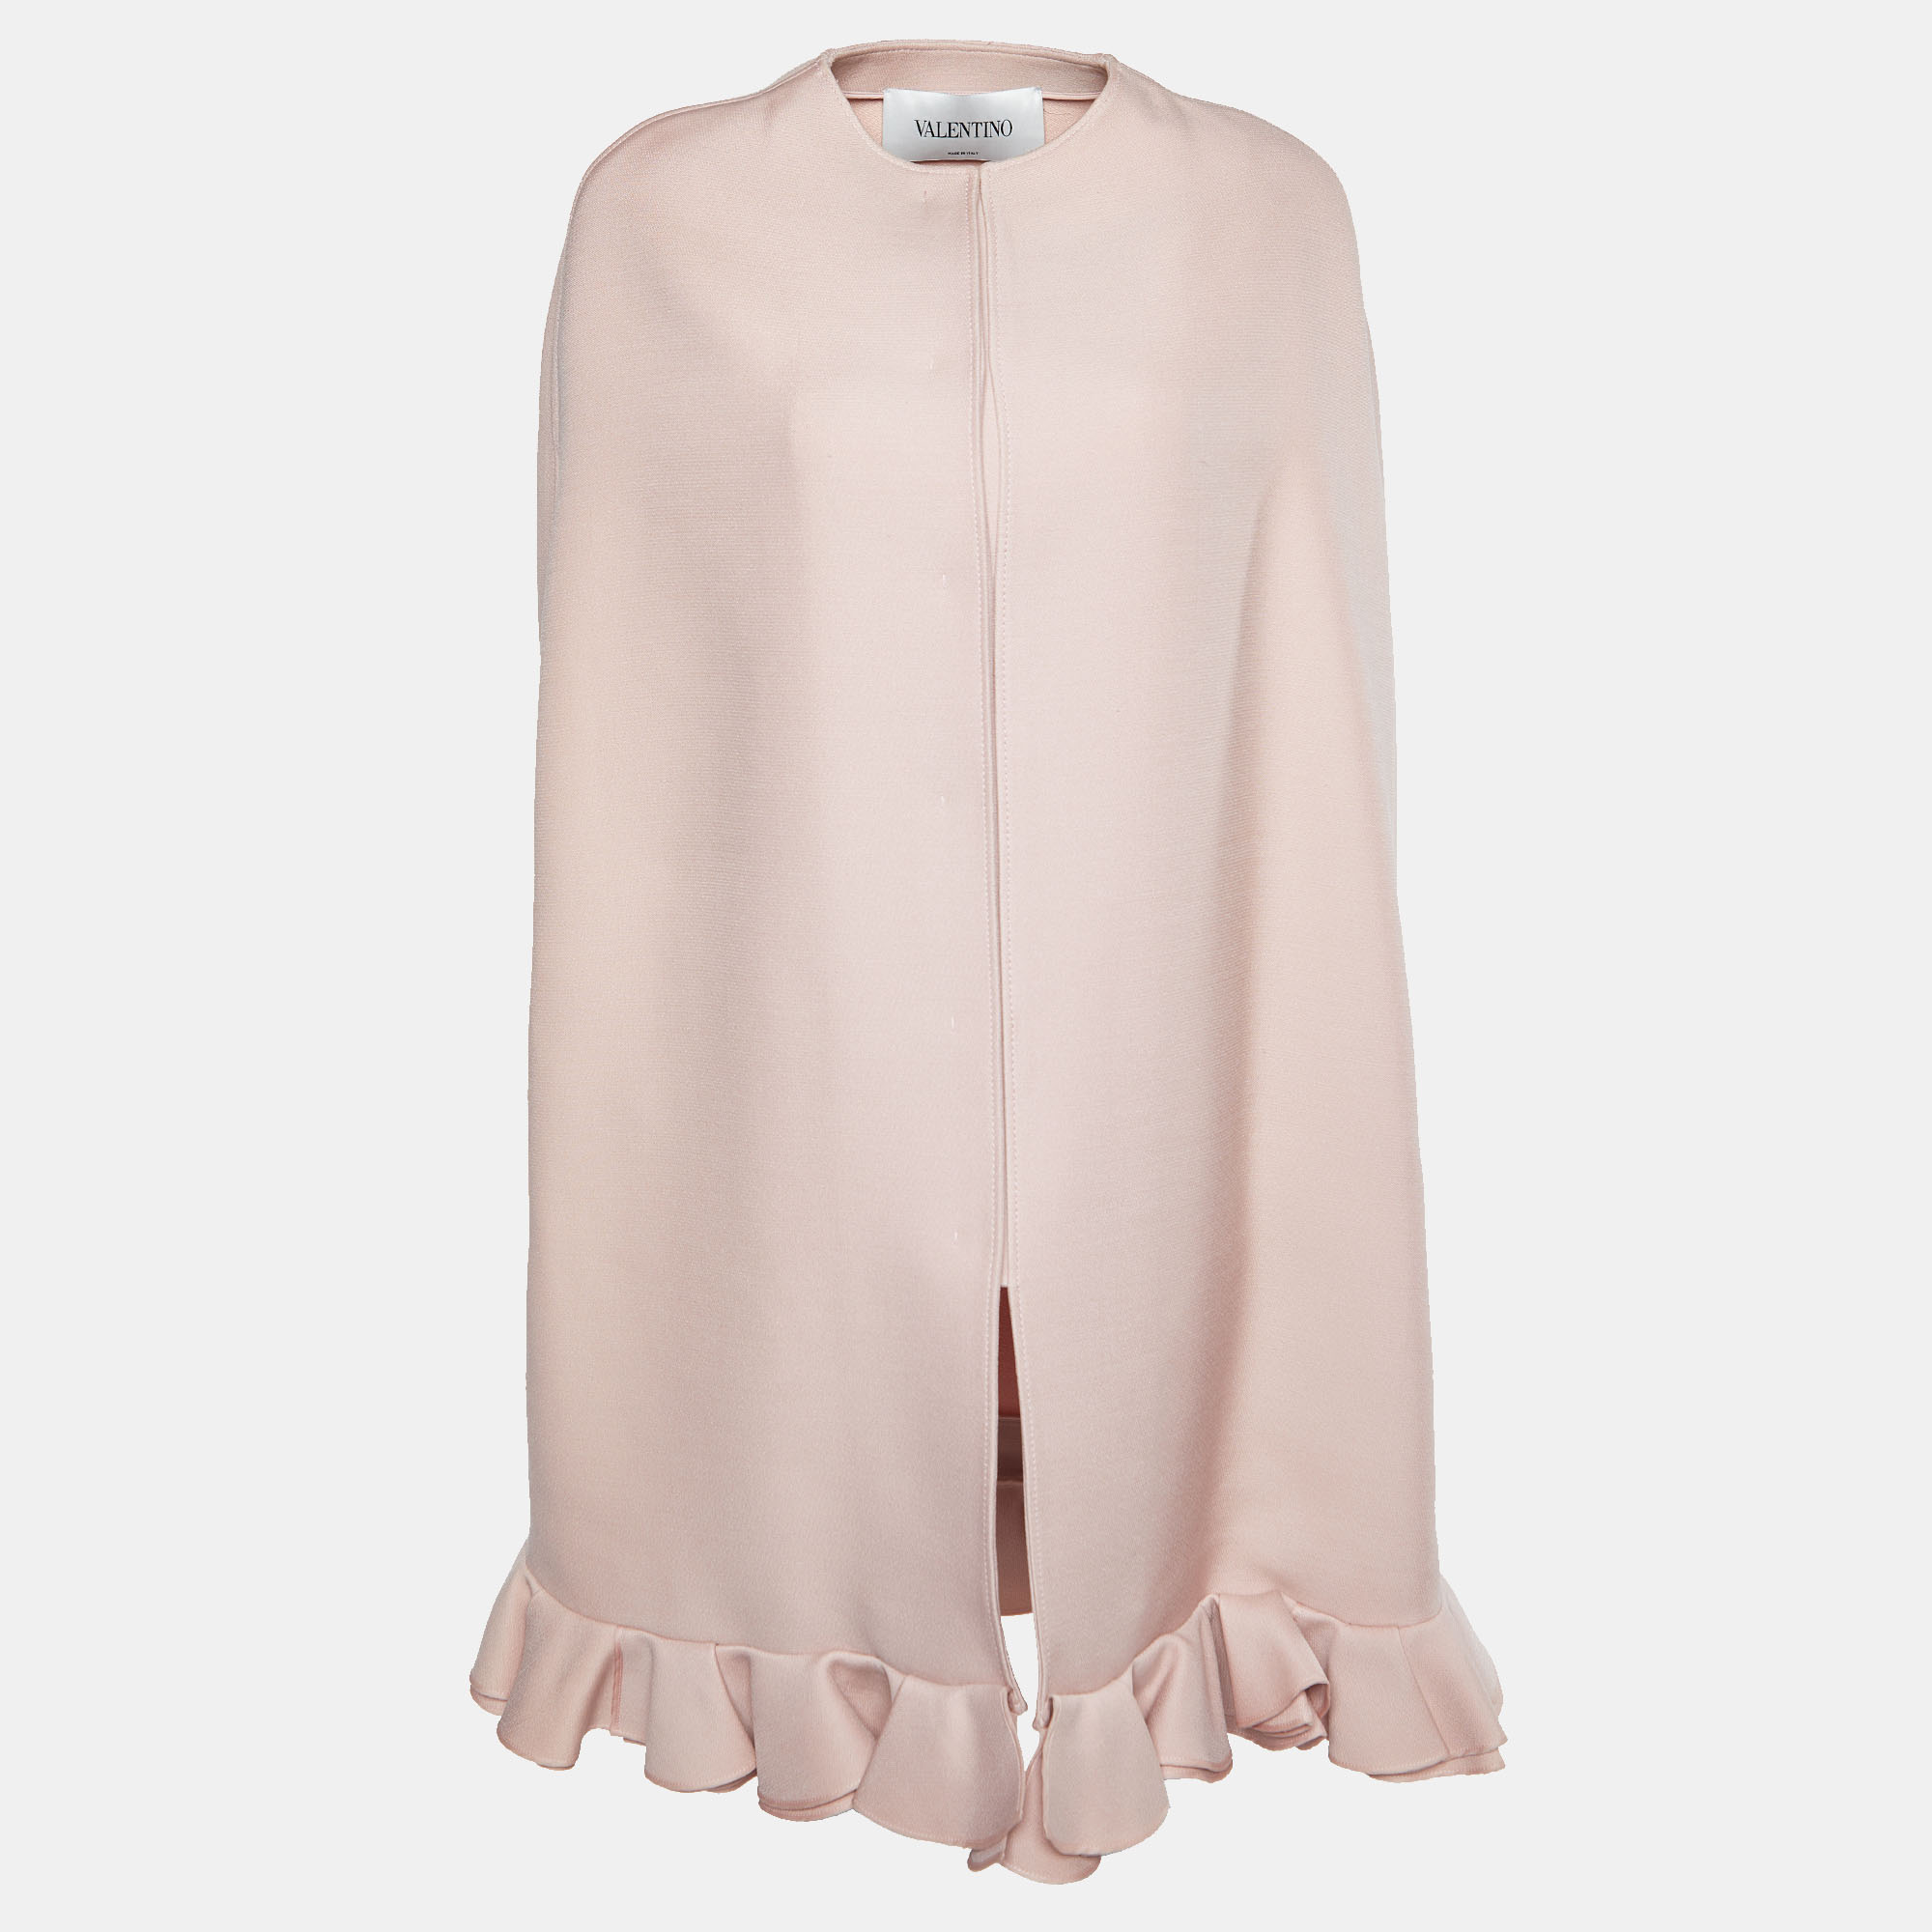 Valentino Pink Wool & Silk Ruffled Cape Coat S